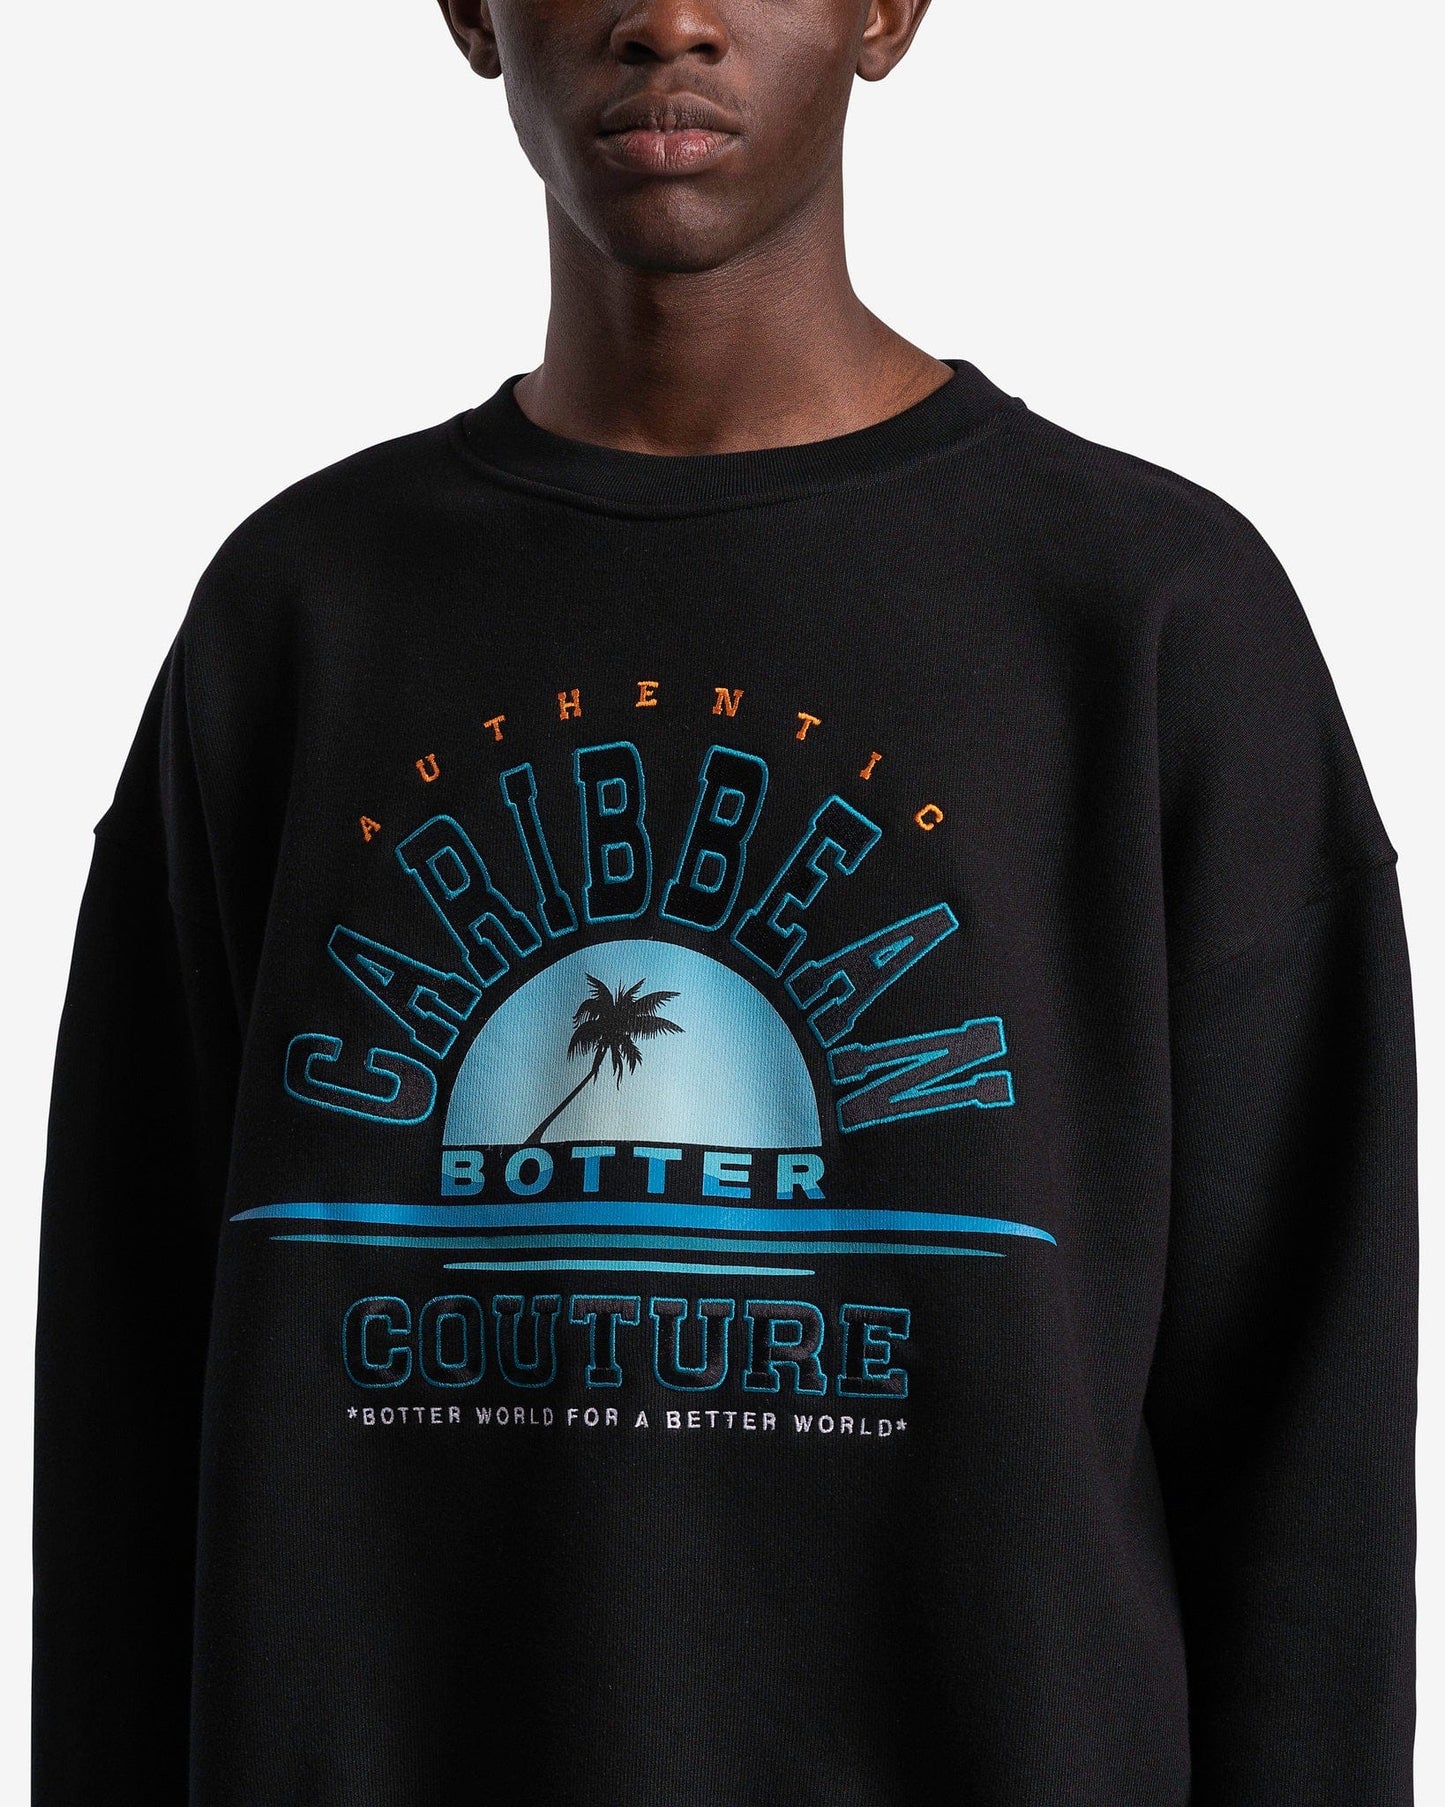 Botter Men's Sweatshirts Caribbean Couture Crewneck Sweater in Black College